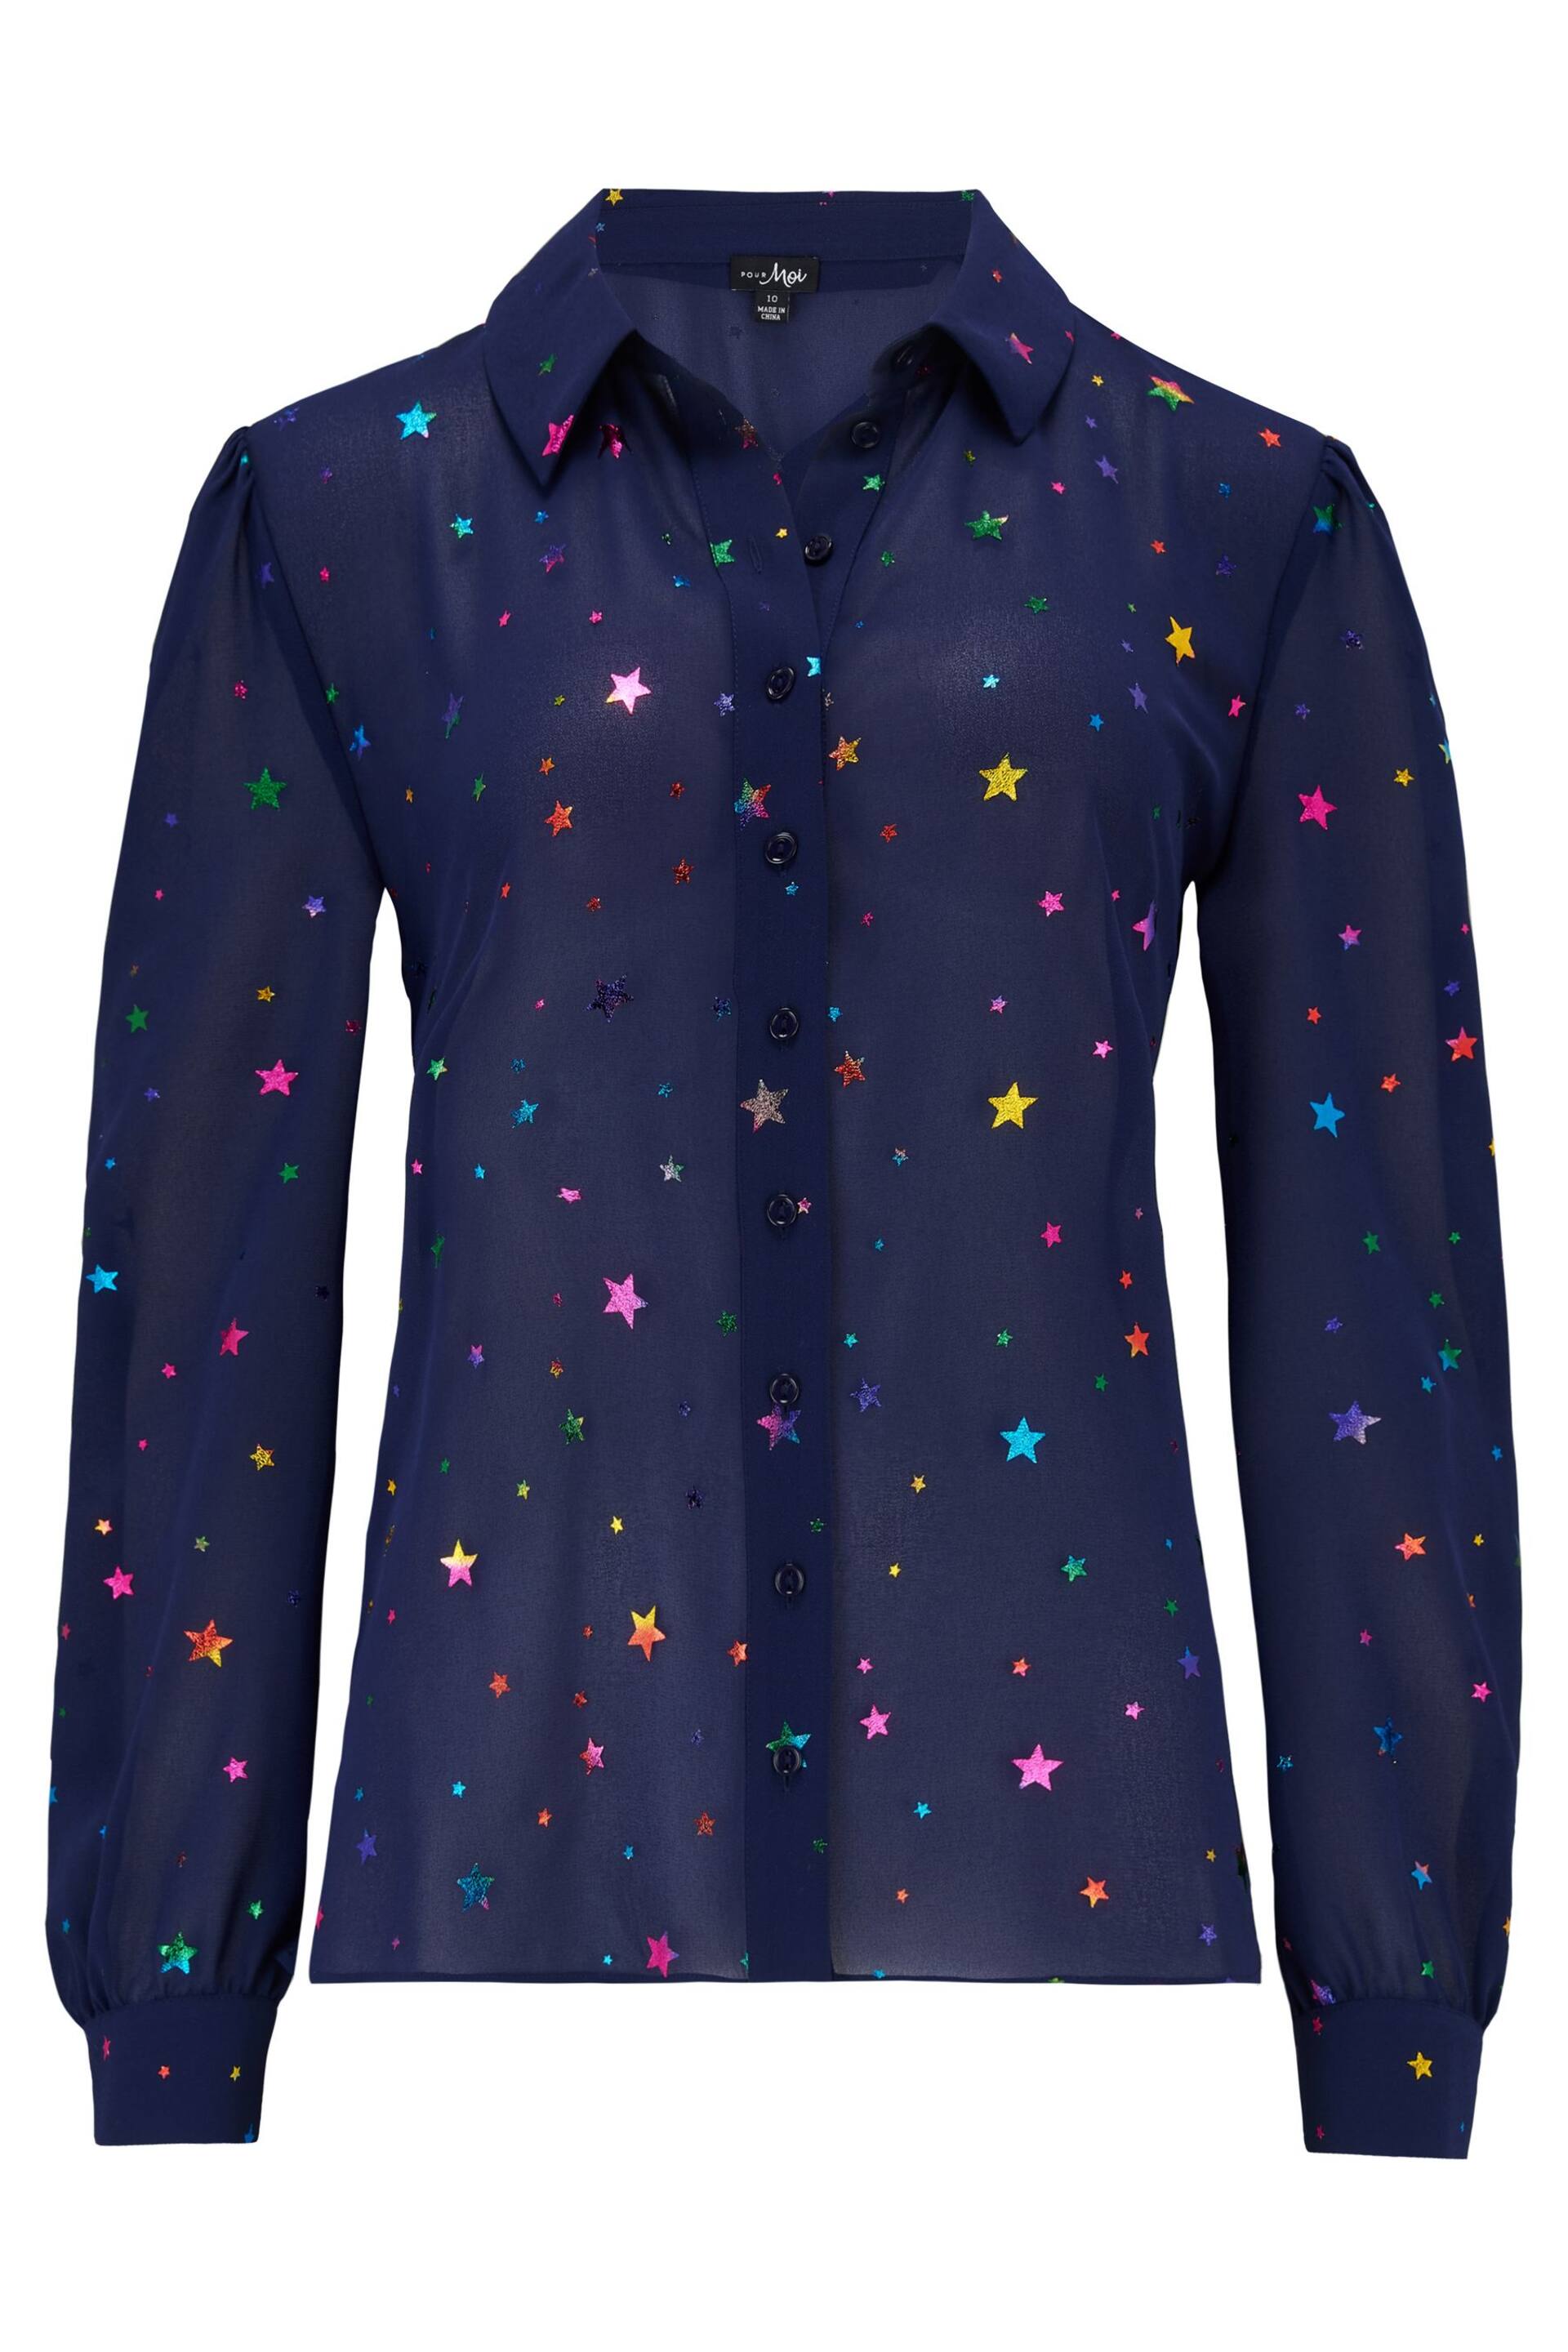 Pour Moi Blue Multi Star Natalya Chiffon Shirt - Image 3 of 4